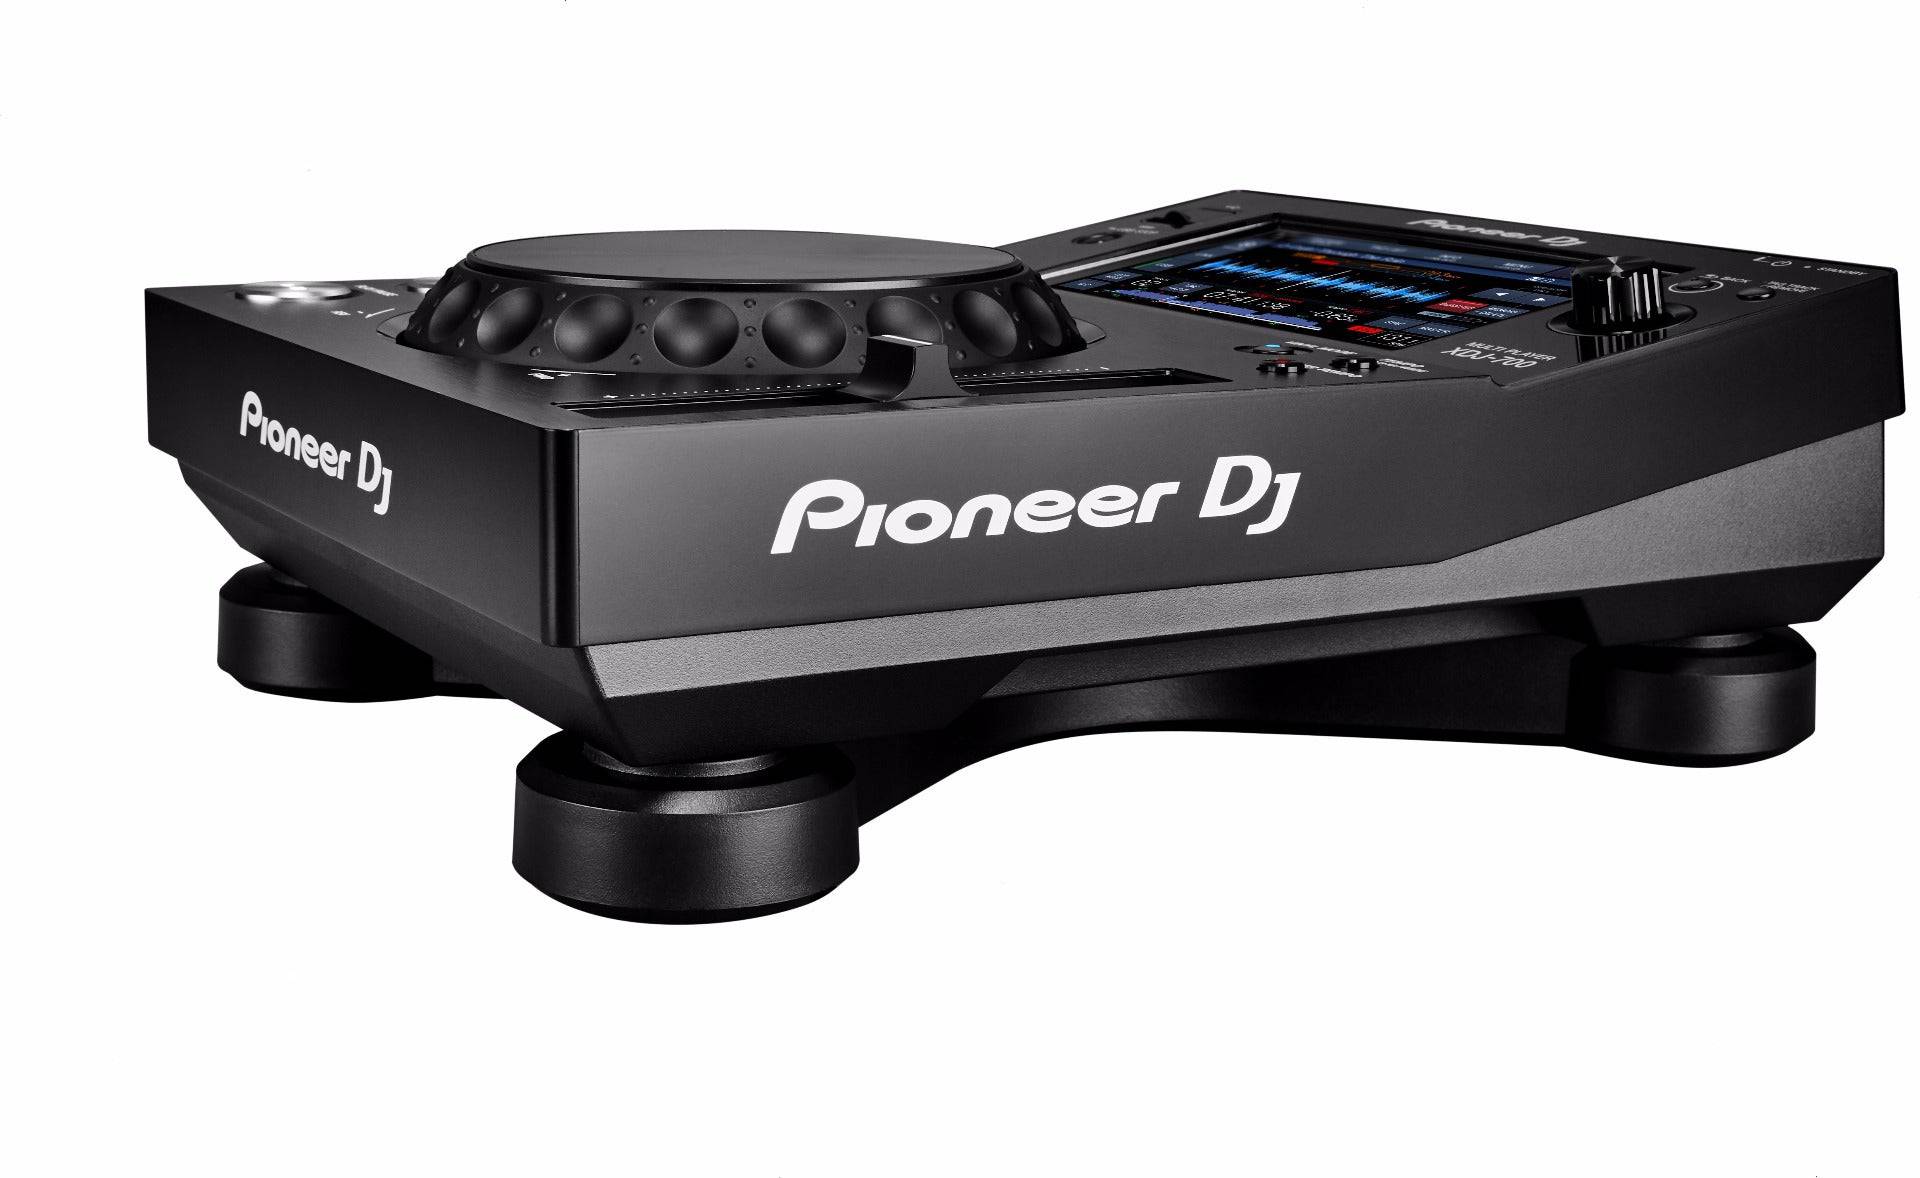 Pioneer Dj XDJ-700 Rekord Box-Ready, Compact Digital Deck - Hollywood DJ